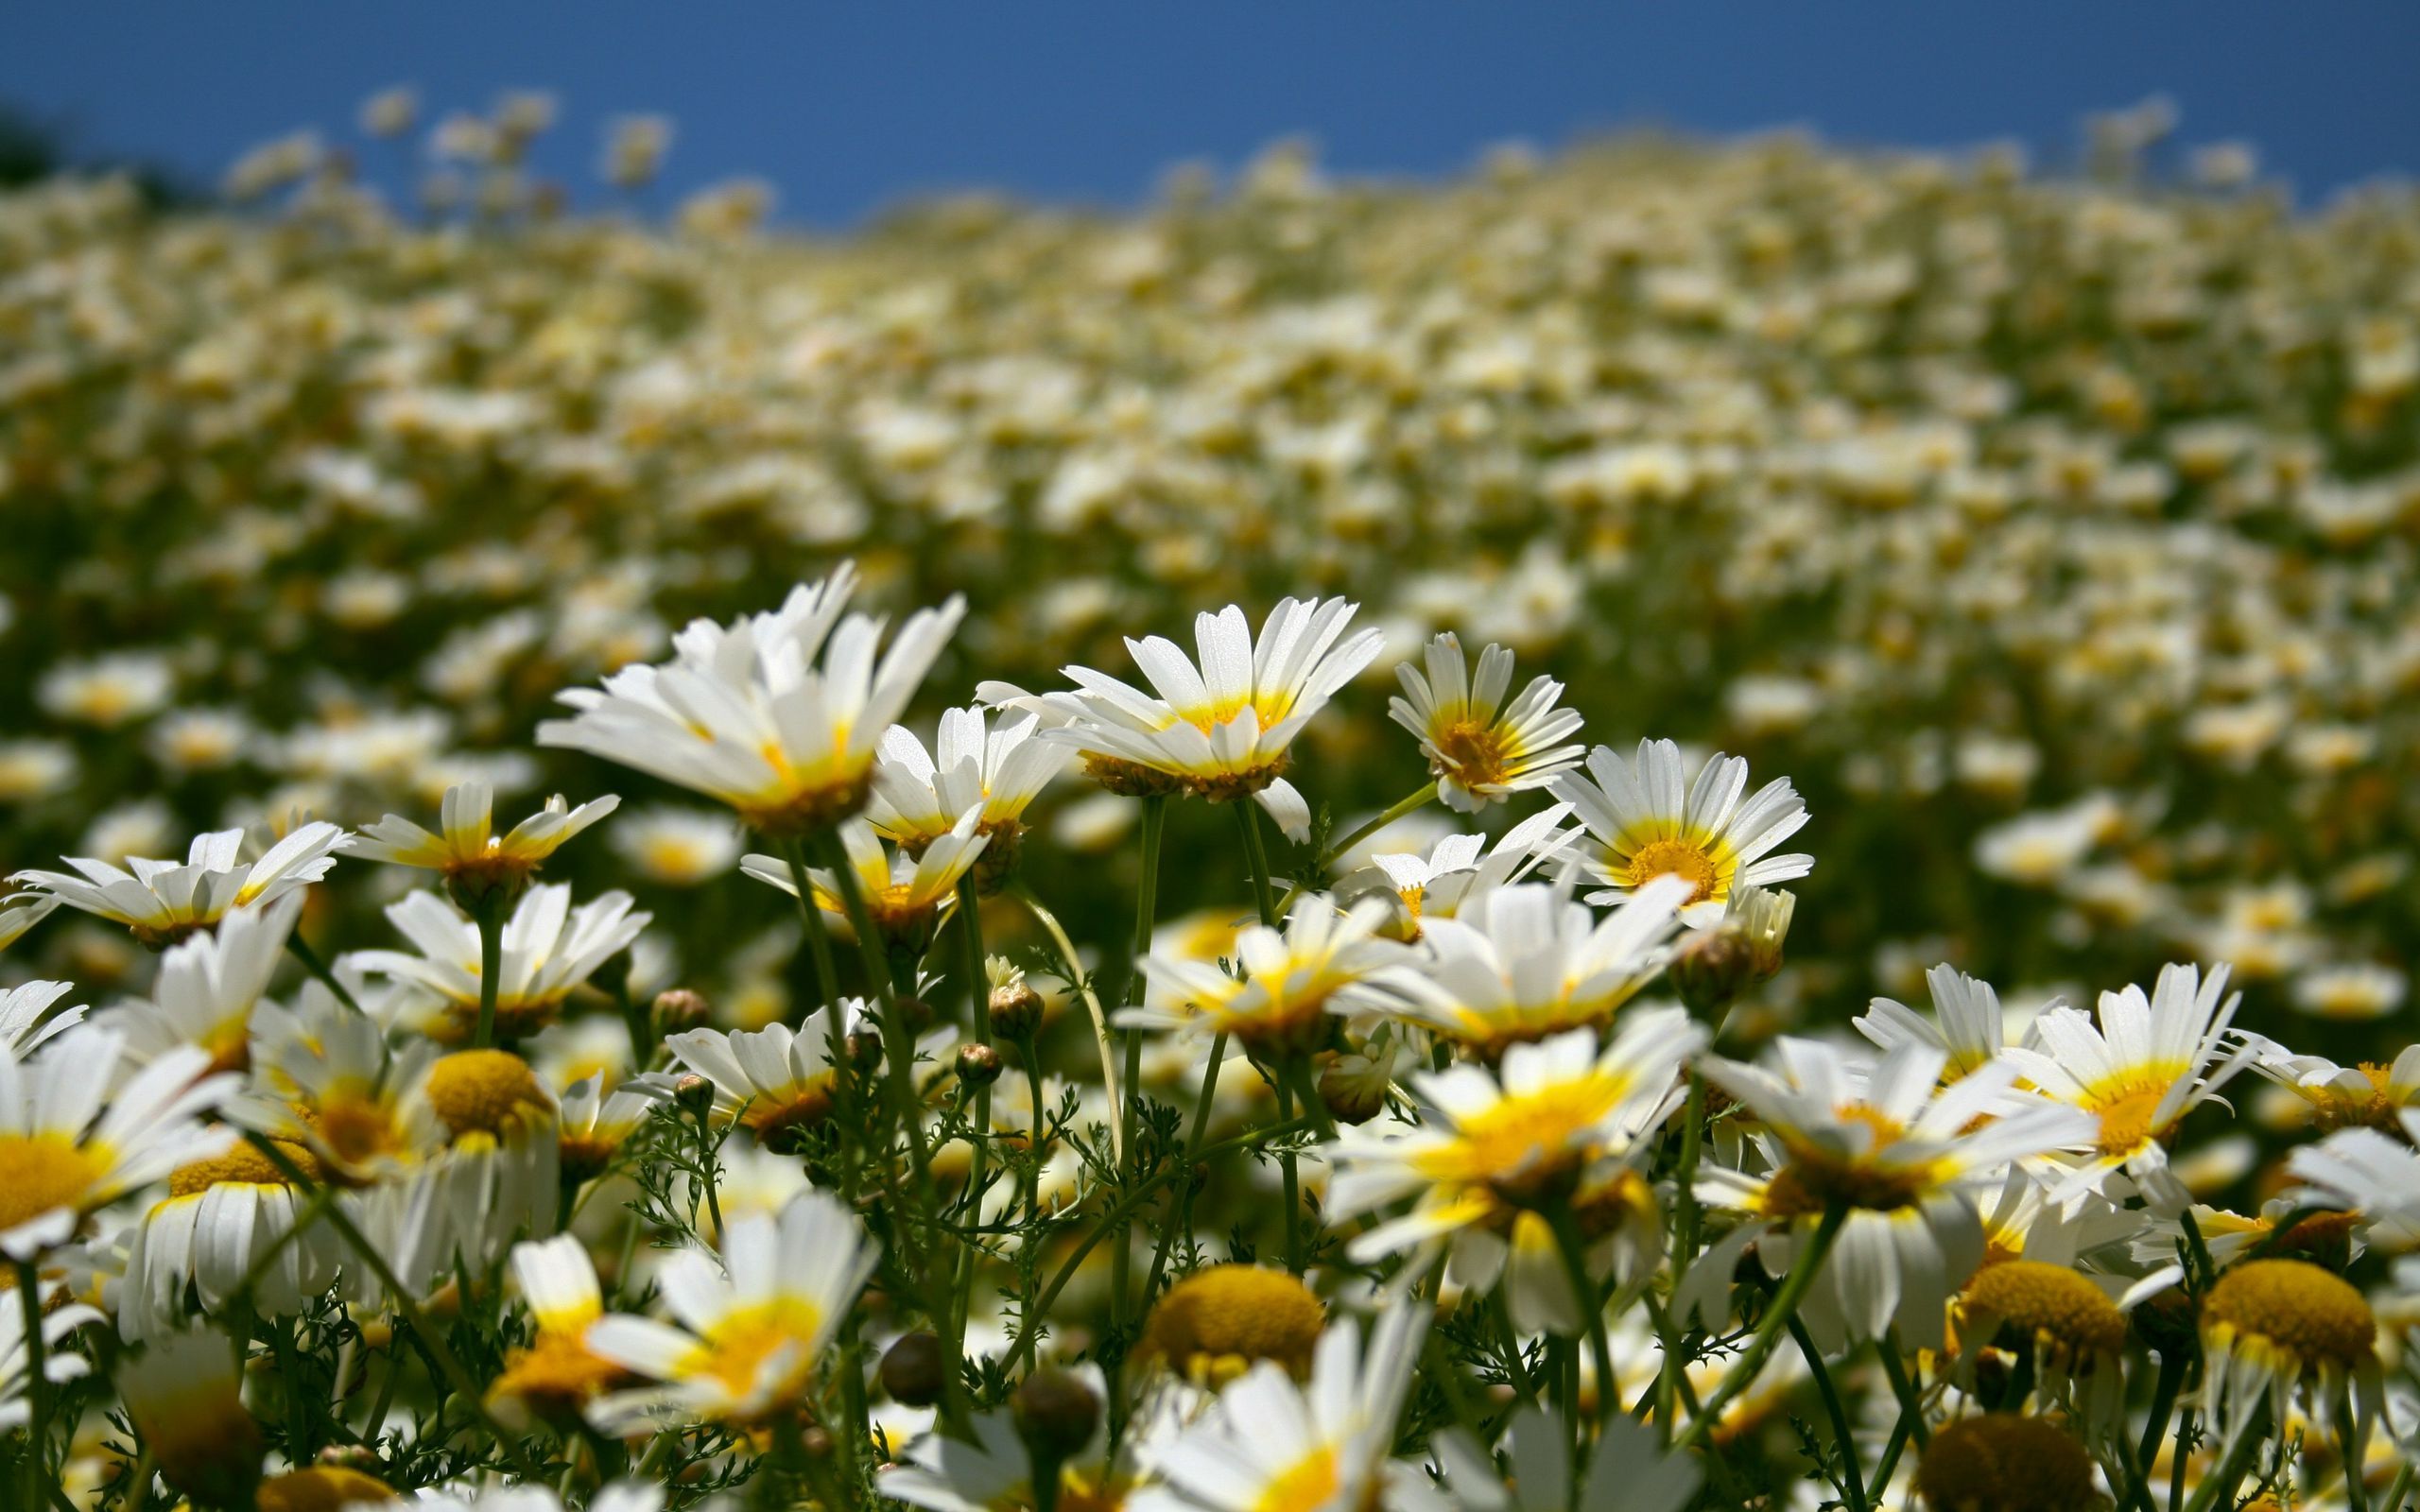 Download wallpaper 2560x1600 daisies, field, petals widescreen 16